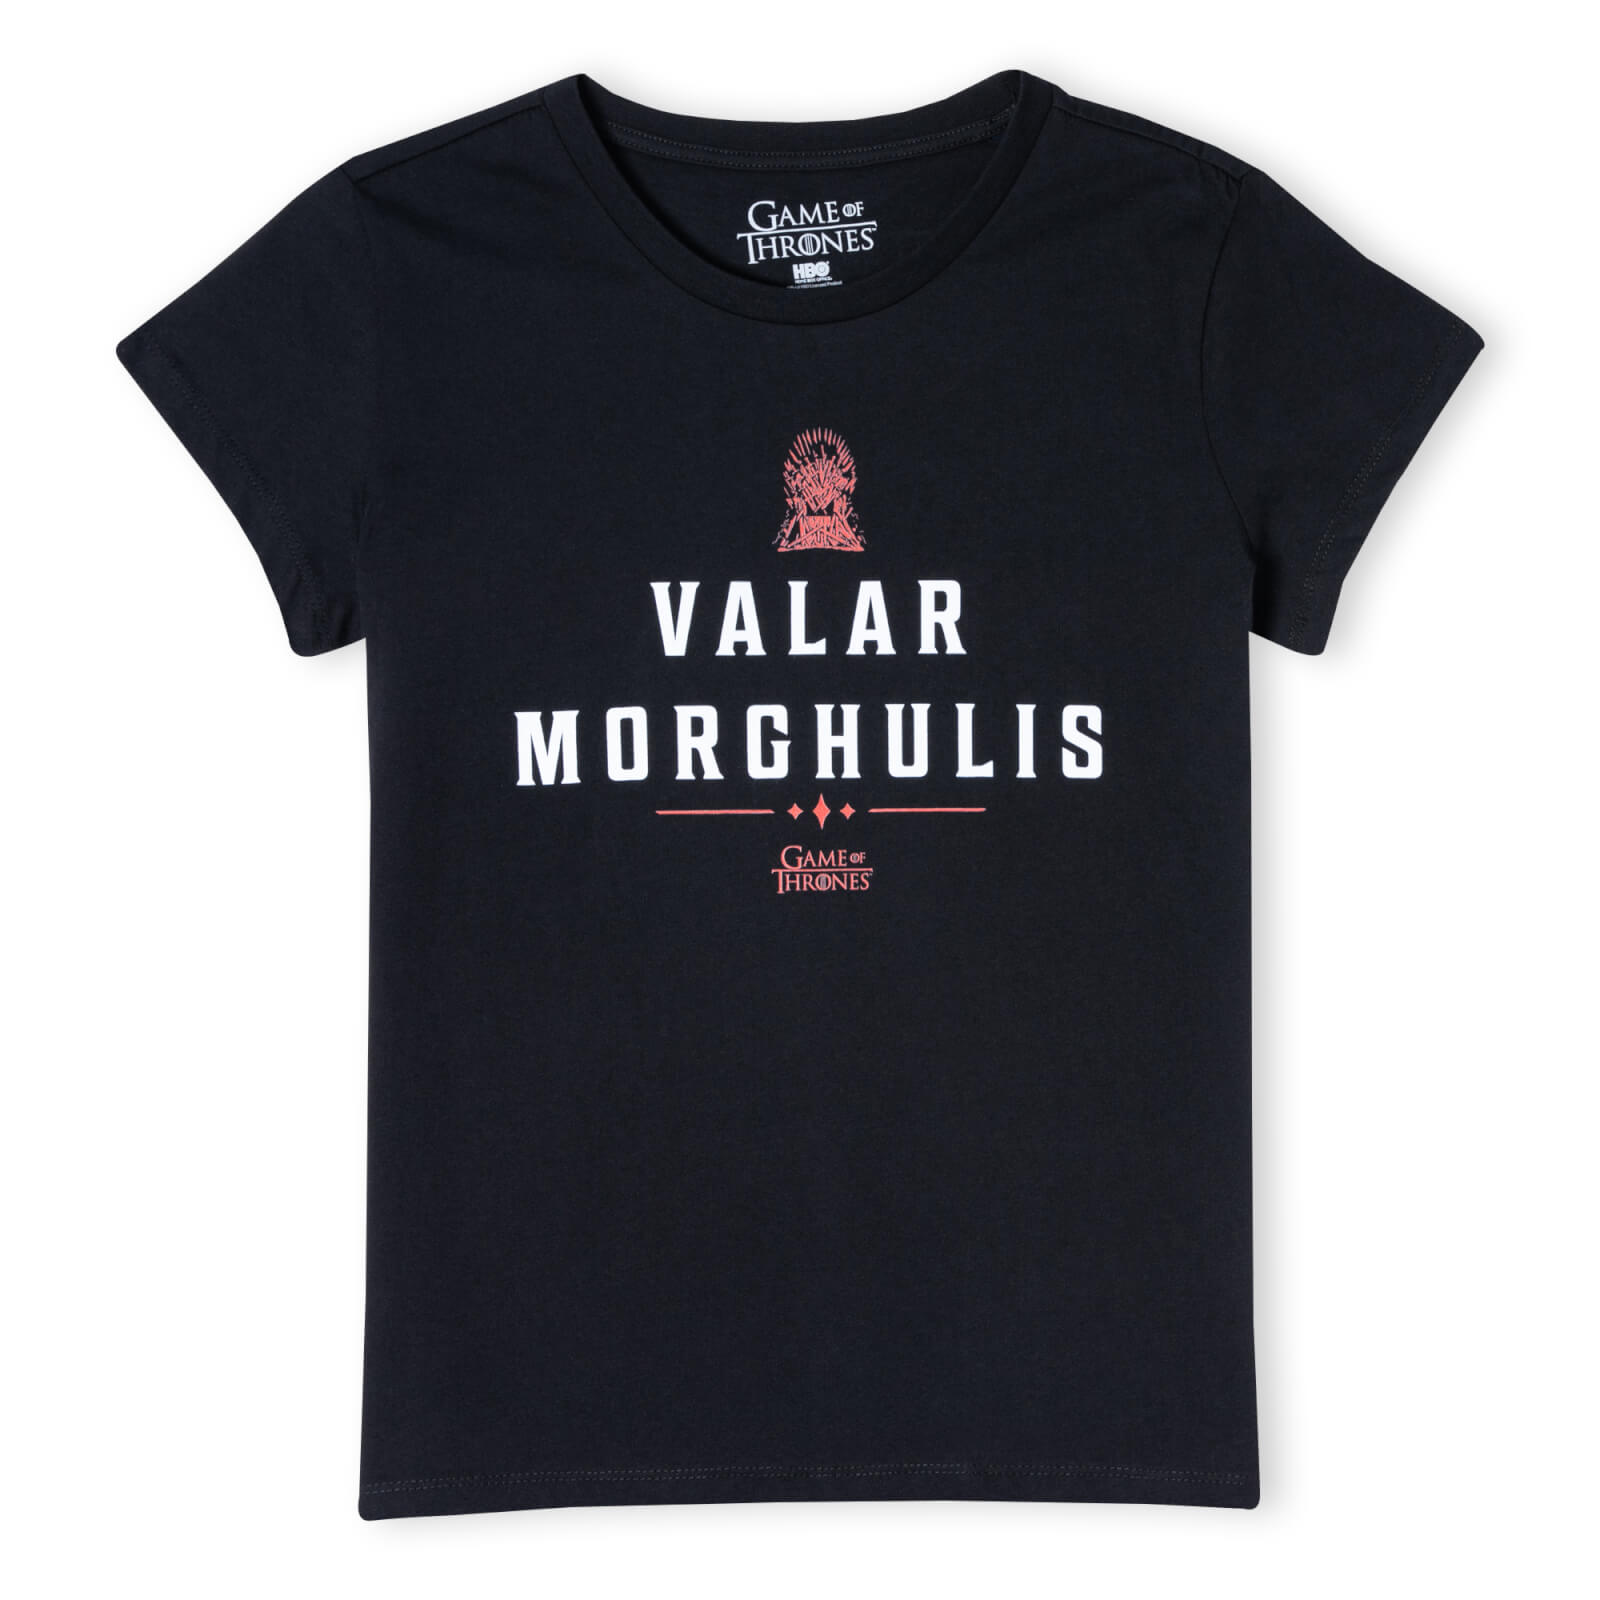 Game of Thrones Valar Morghulis Women's T-Shirt - Black - XXL - Black